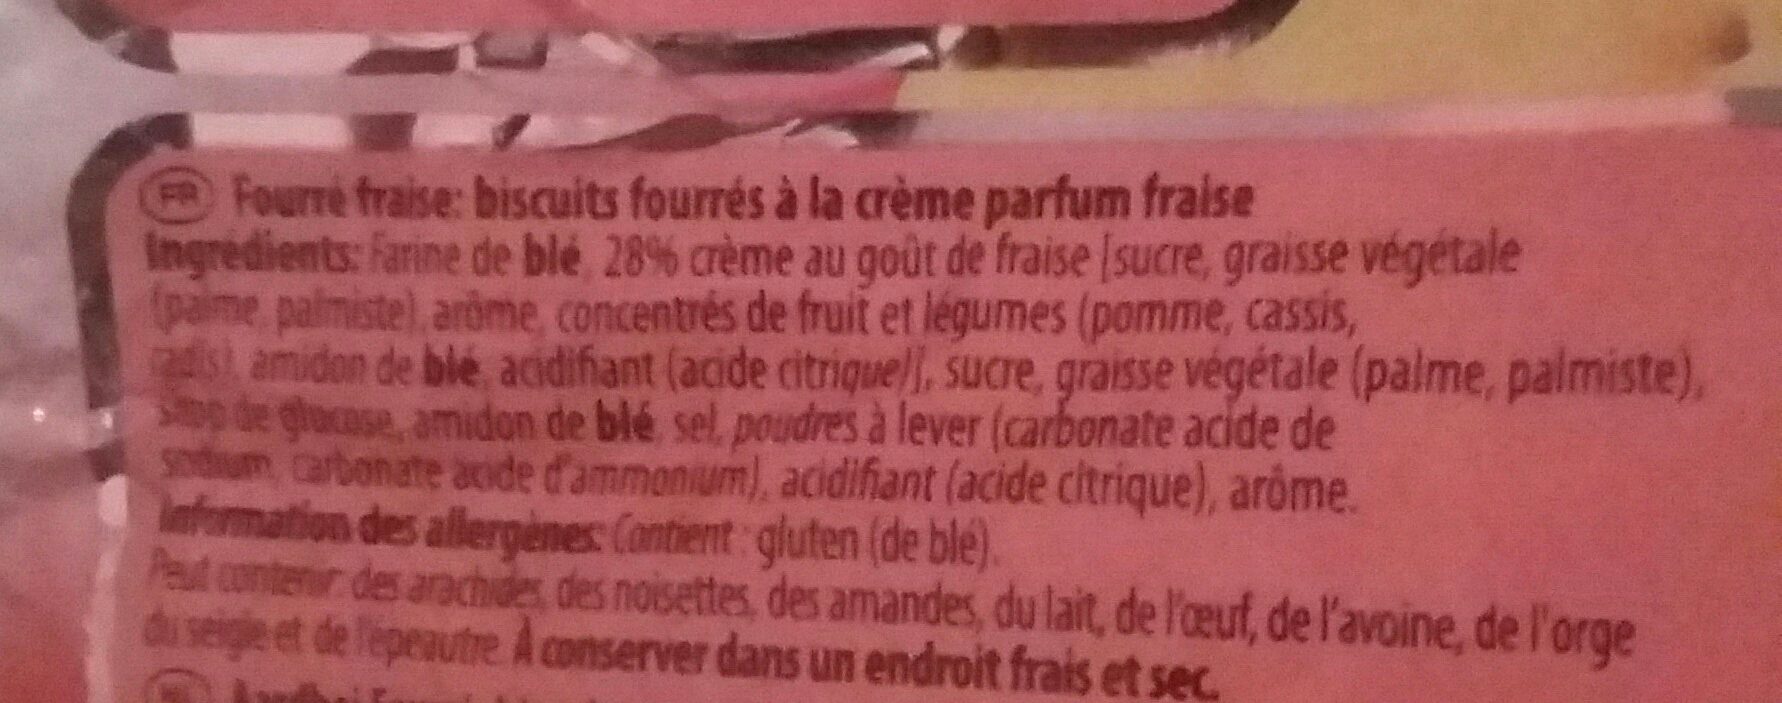 Biscuits Fourres Fraise - Ingredients - fr